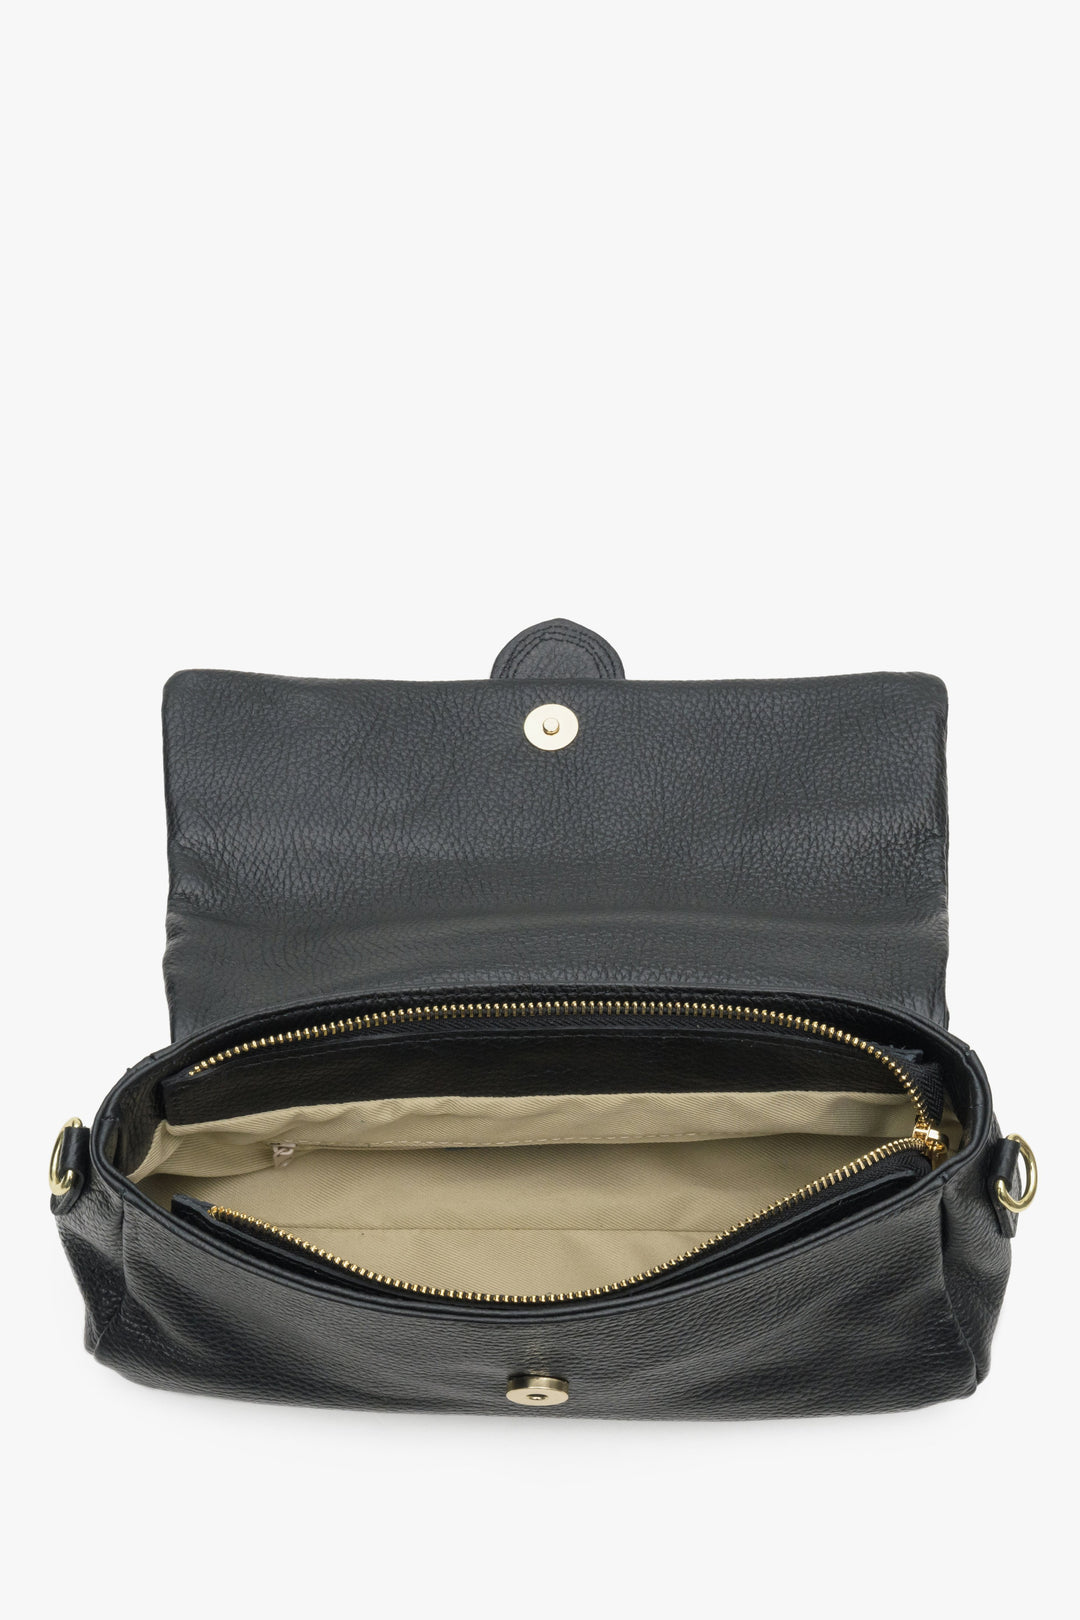 Elegant women's handbag in black Estro - presentation of the bag's main pocket.